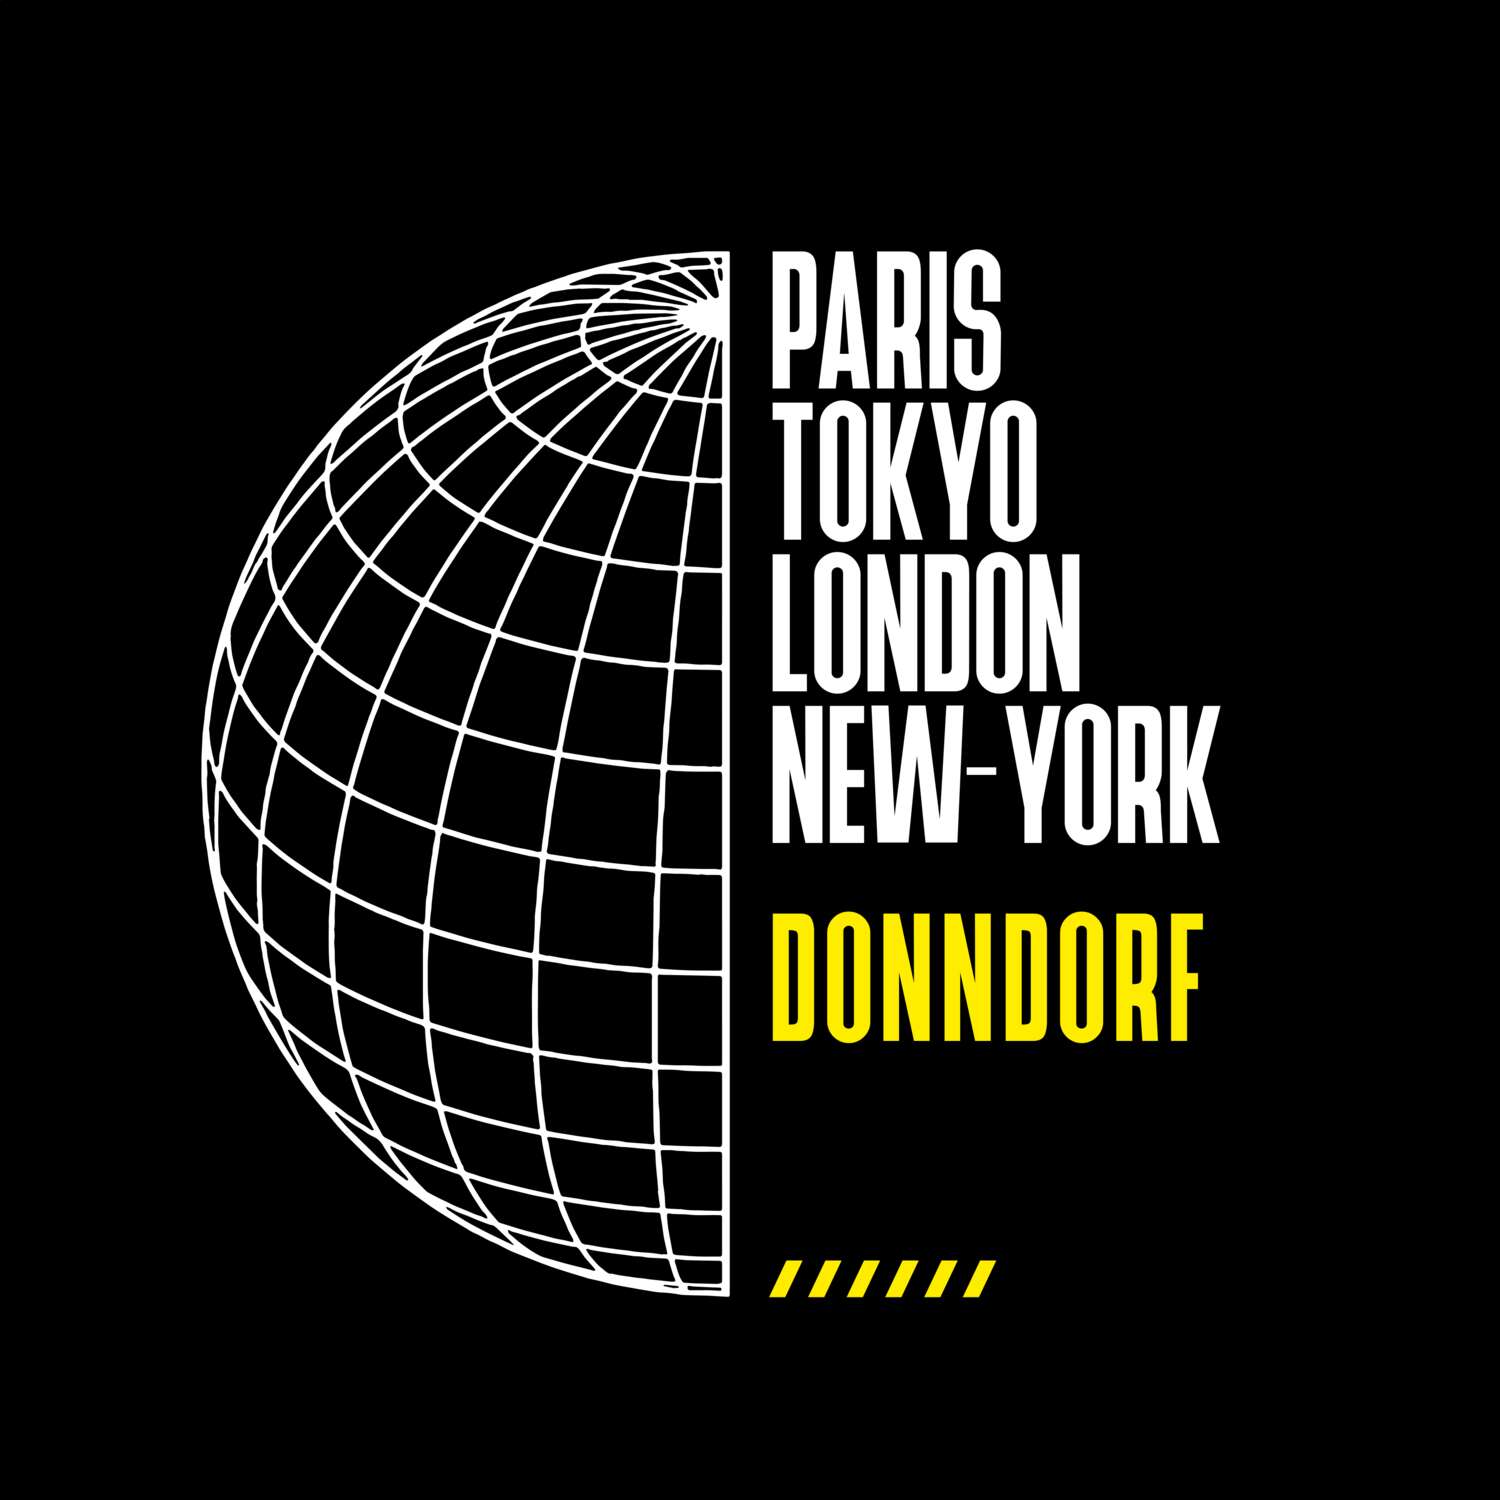 Donndorf T-Shirt »Paris Tokyo London«